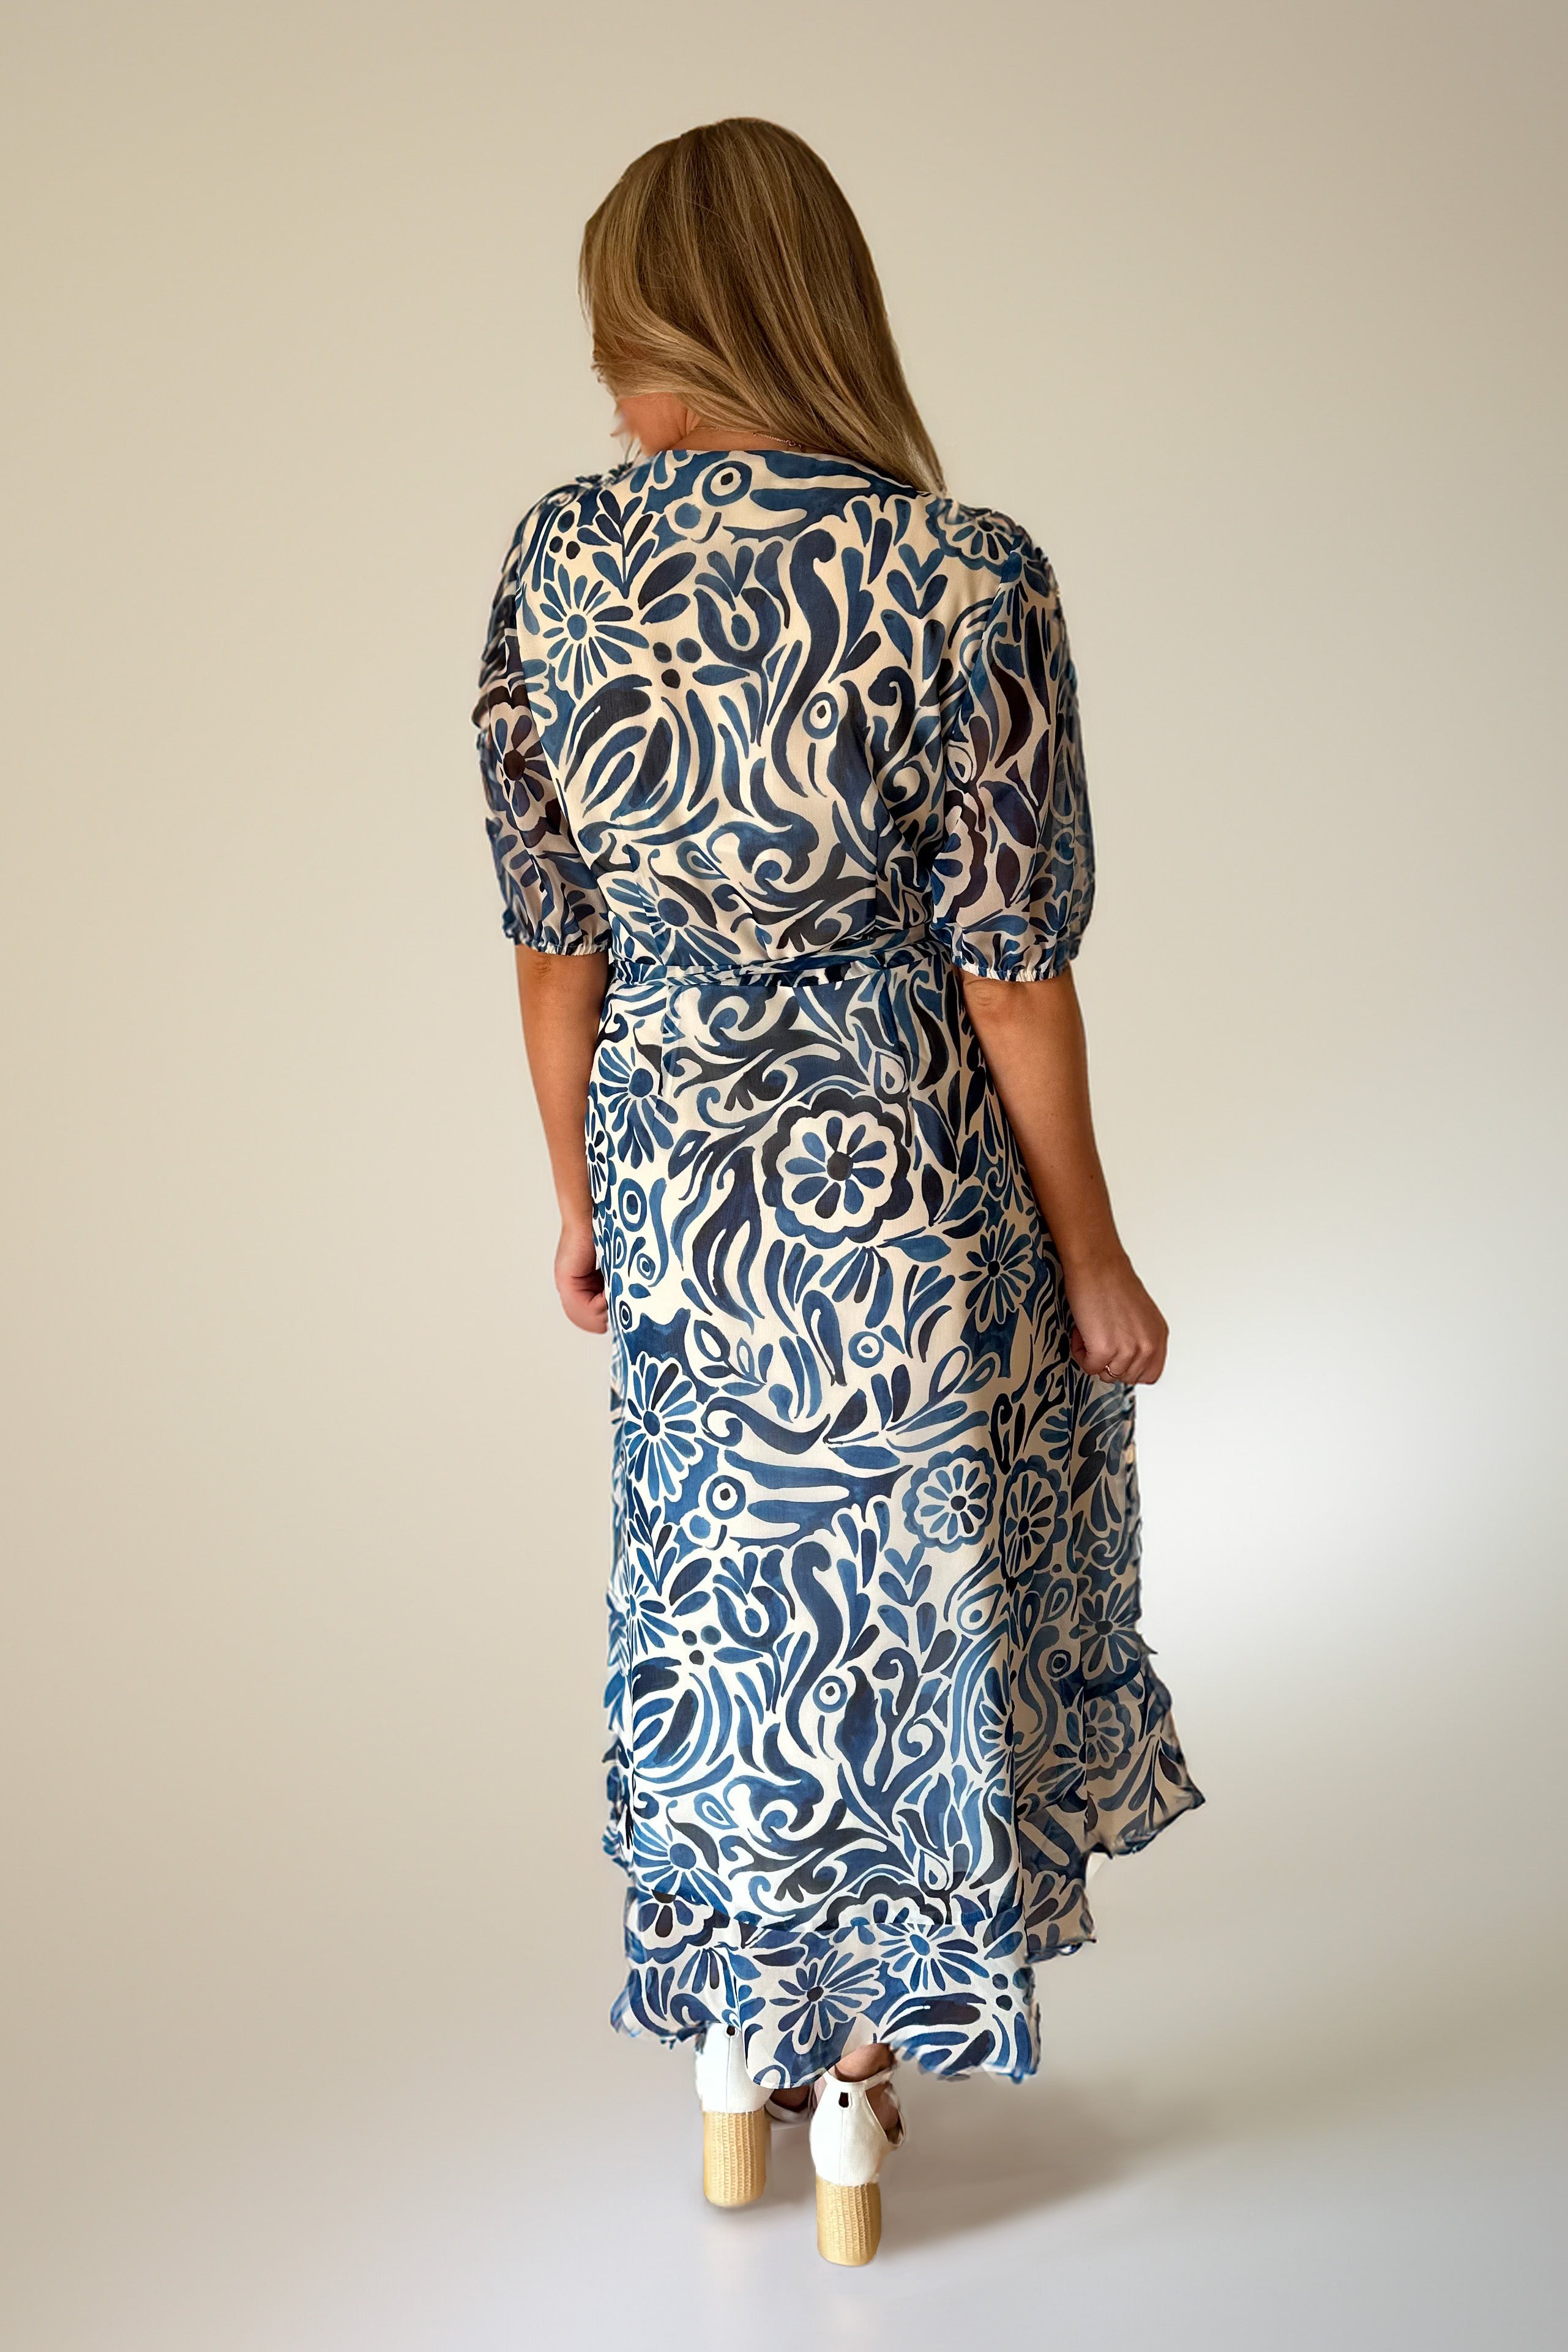 Woman in paisley print dress